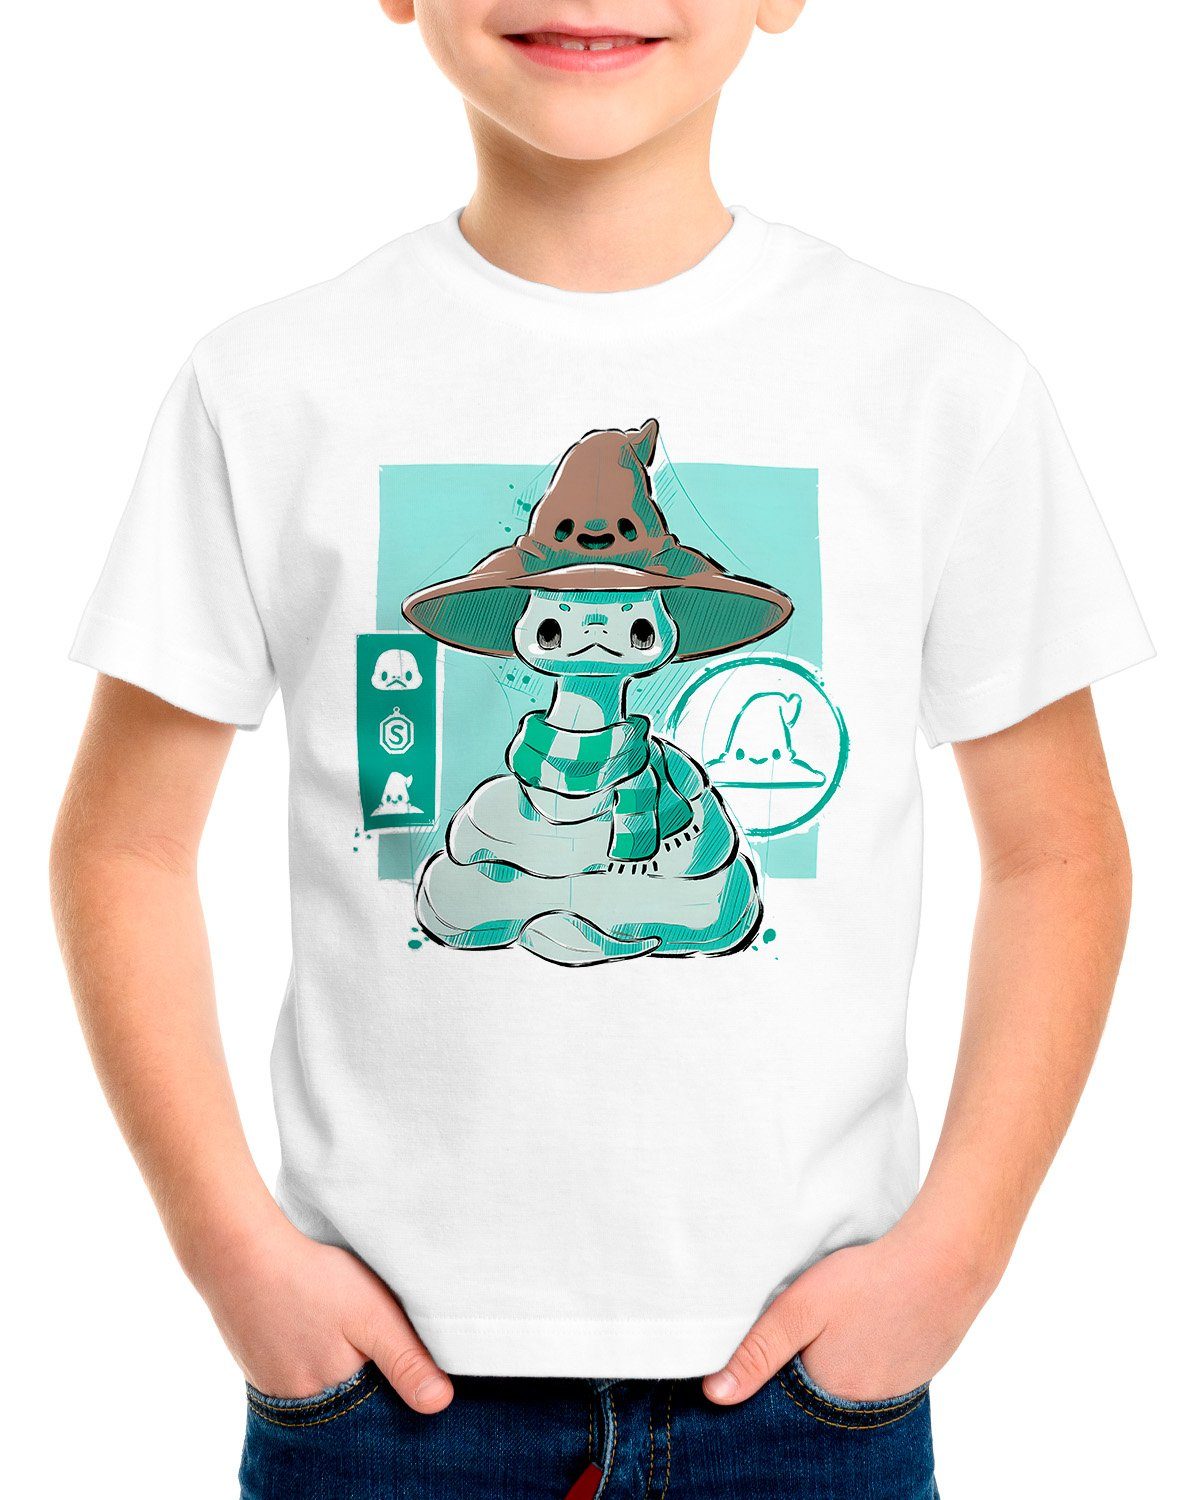 Chibi Print-Shirt slytherin potter T-Shirt style3 hogwarts Kinder harry legacy Ambitious hufflepuff ravenclaw gryffindor